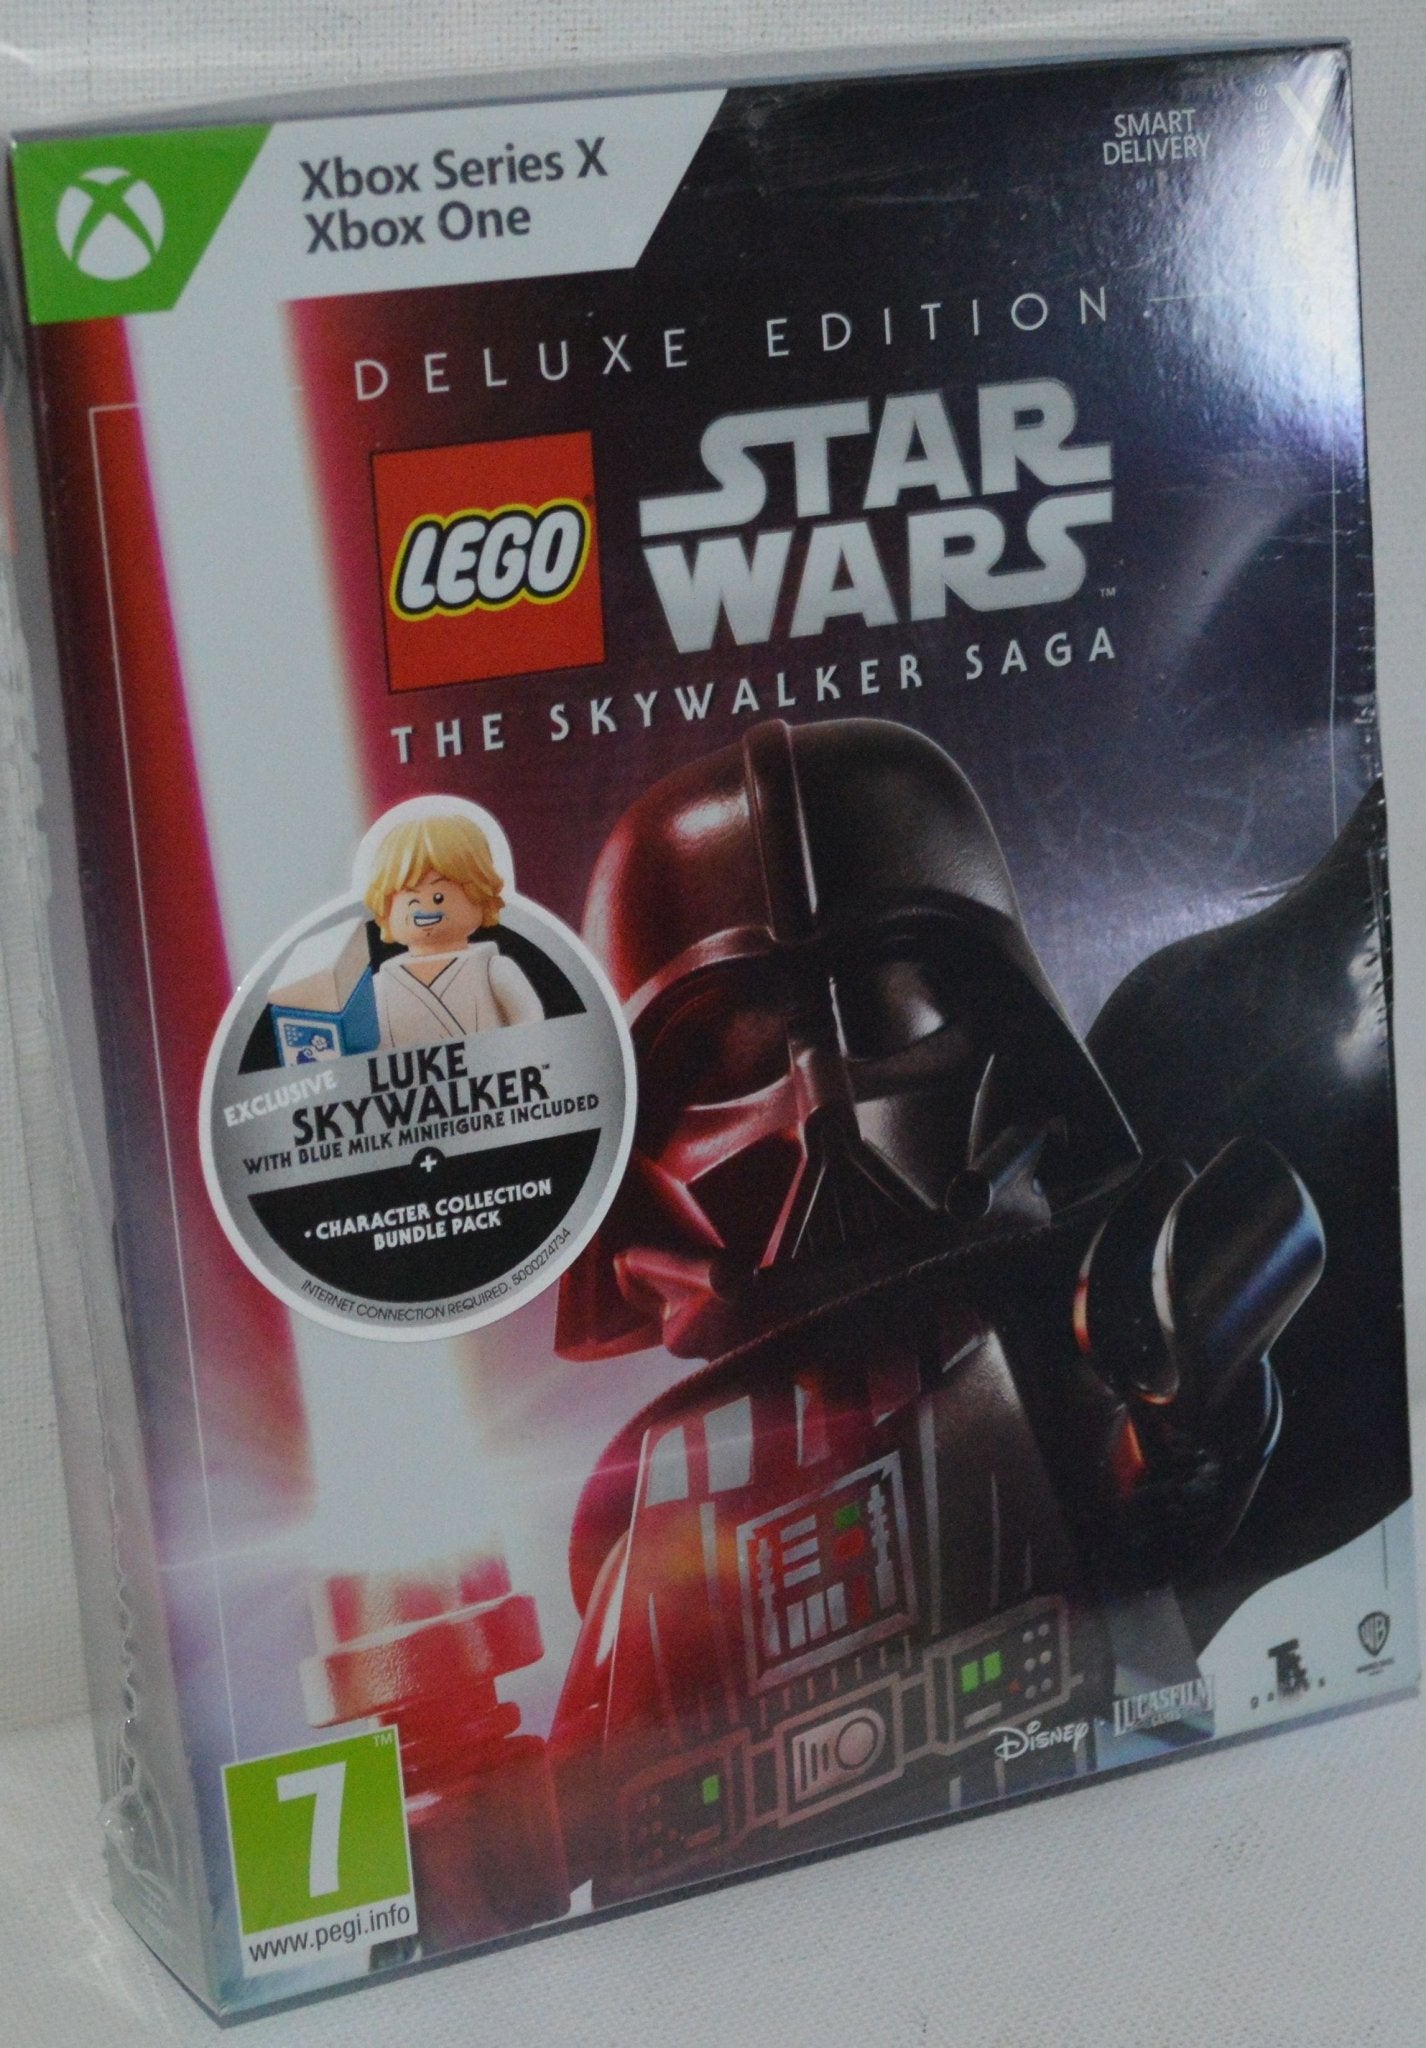 NEW LEGO STAR WARS THE SKYWALKER SAGA BLUE MILK LUKE DELUXE EDITION XBOX ONE VIDEO GAME - TMD167207